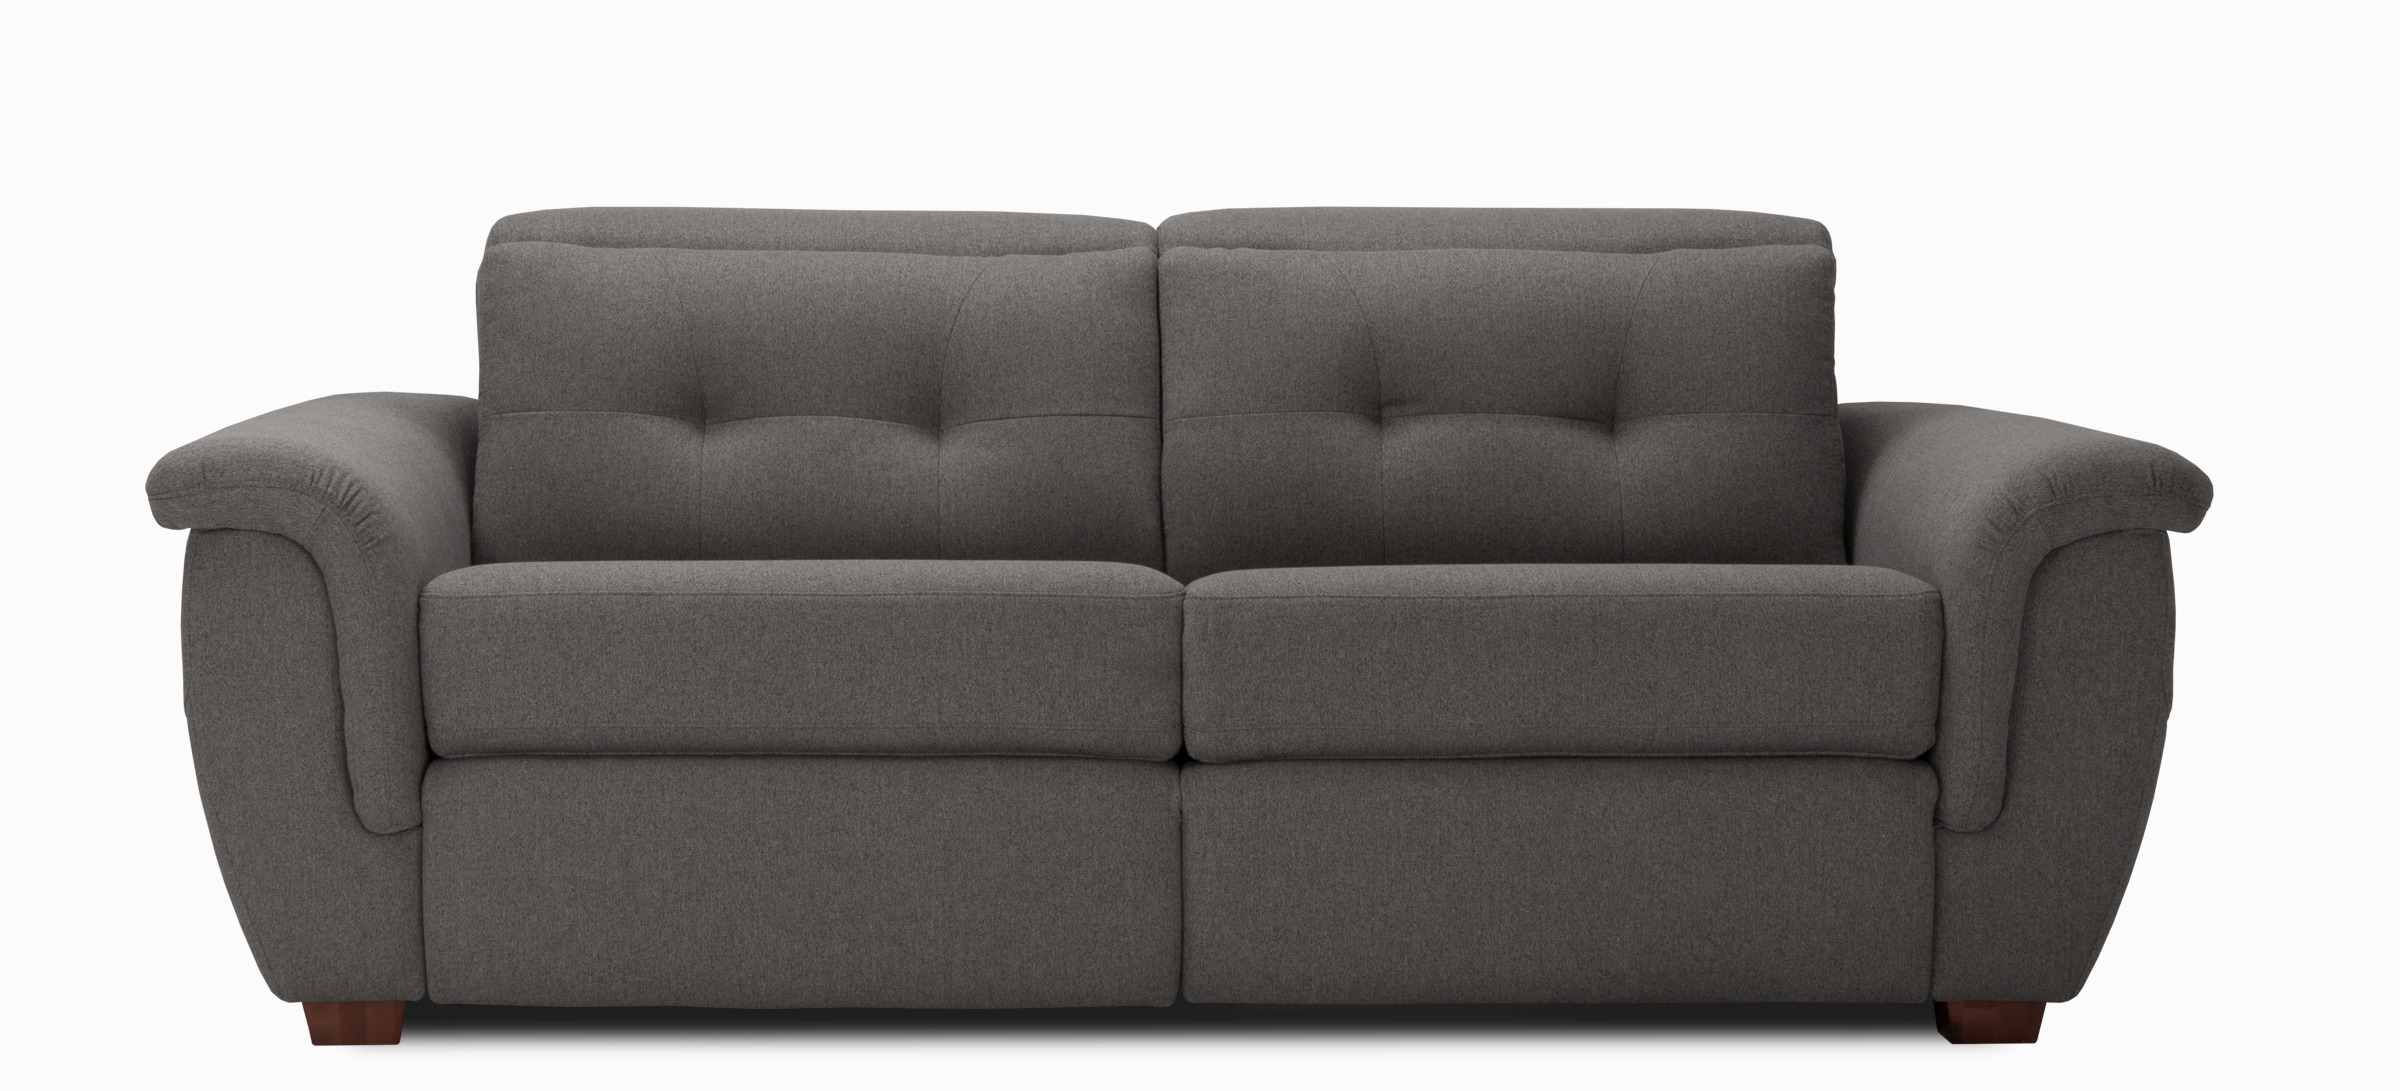 San_francisco sofa apt pl dark grey front